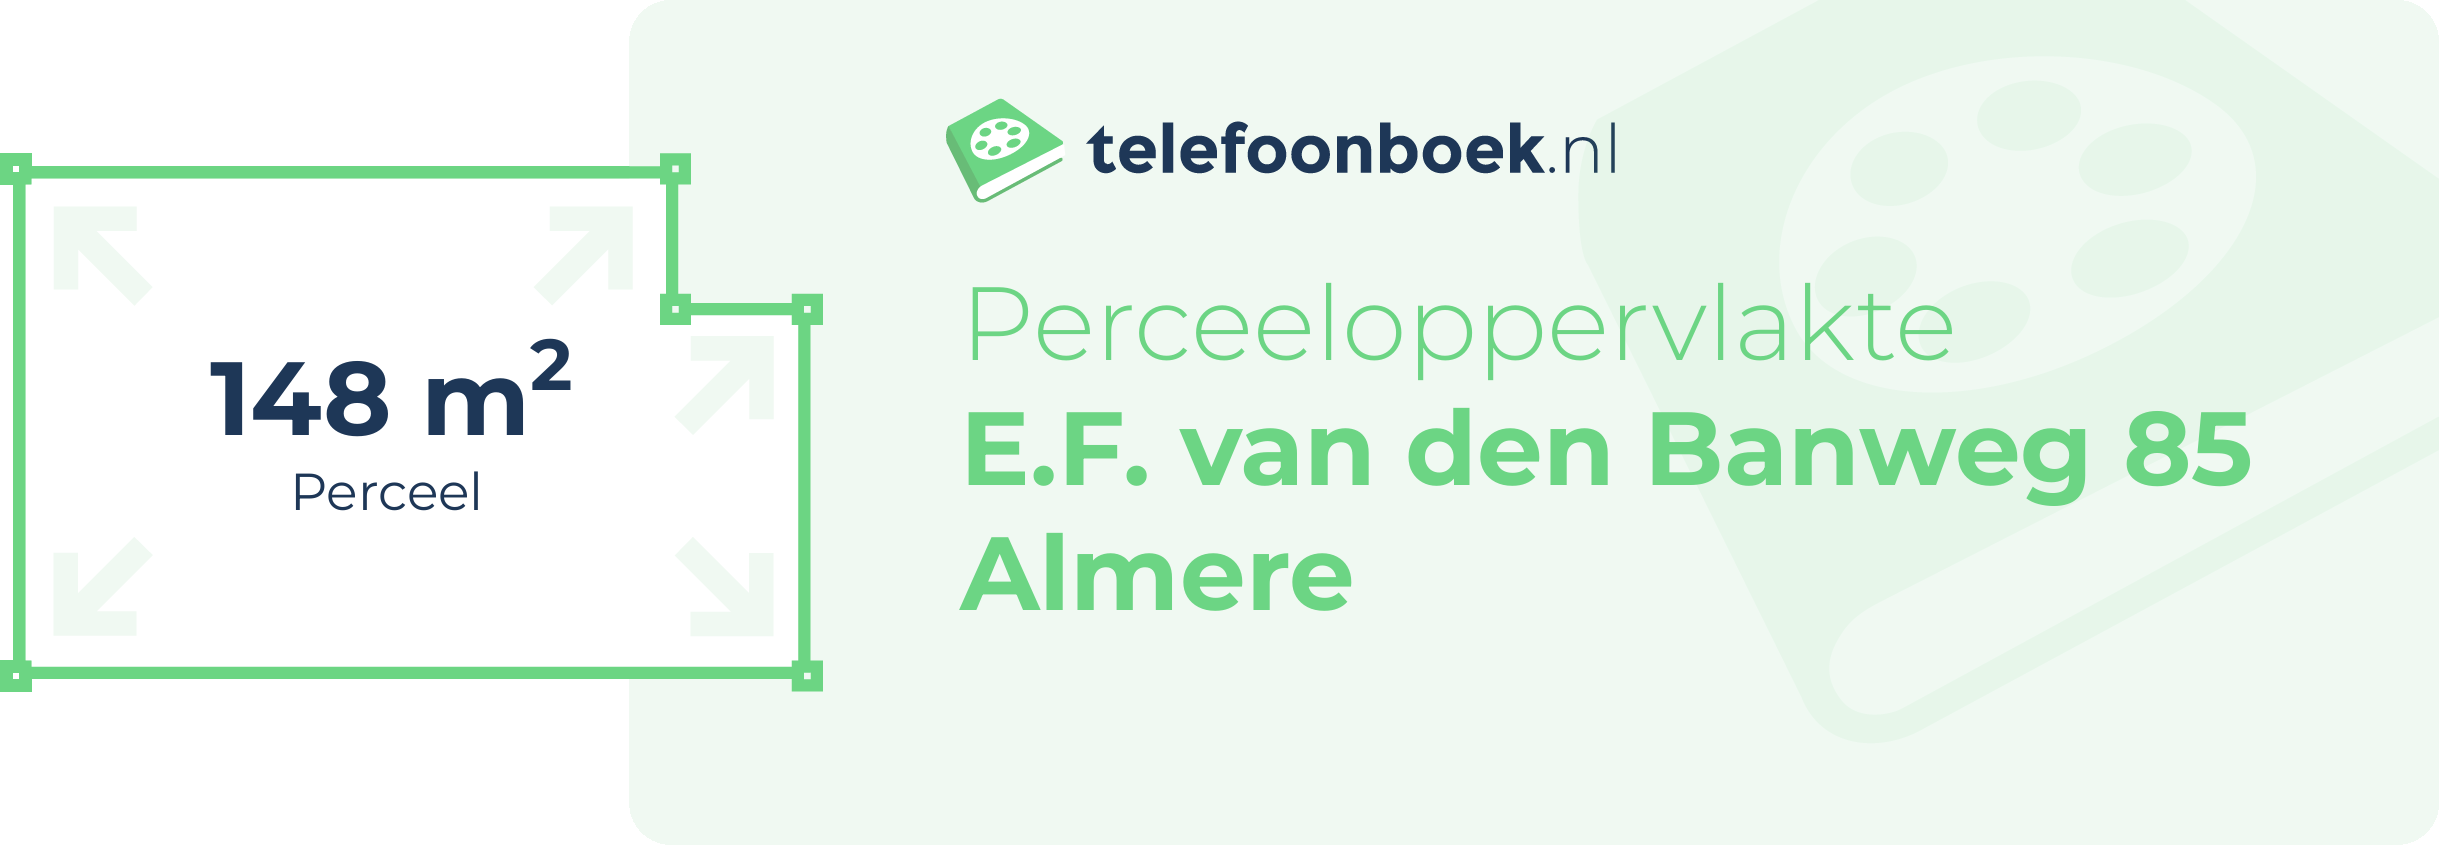 Perceeloppervlakte E.F. Van Den Banweg 85 Almere